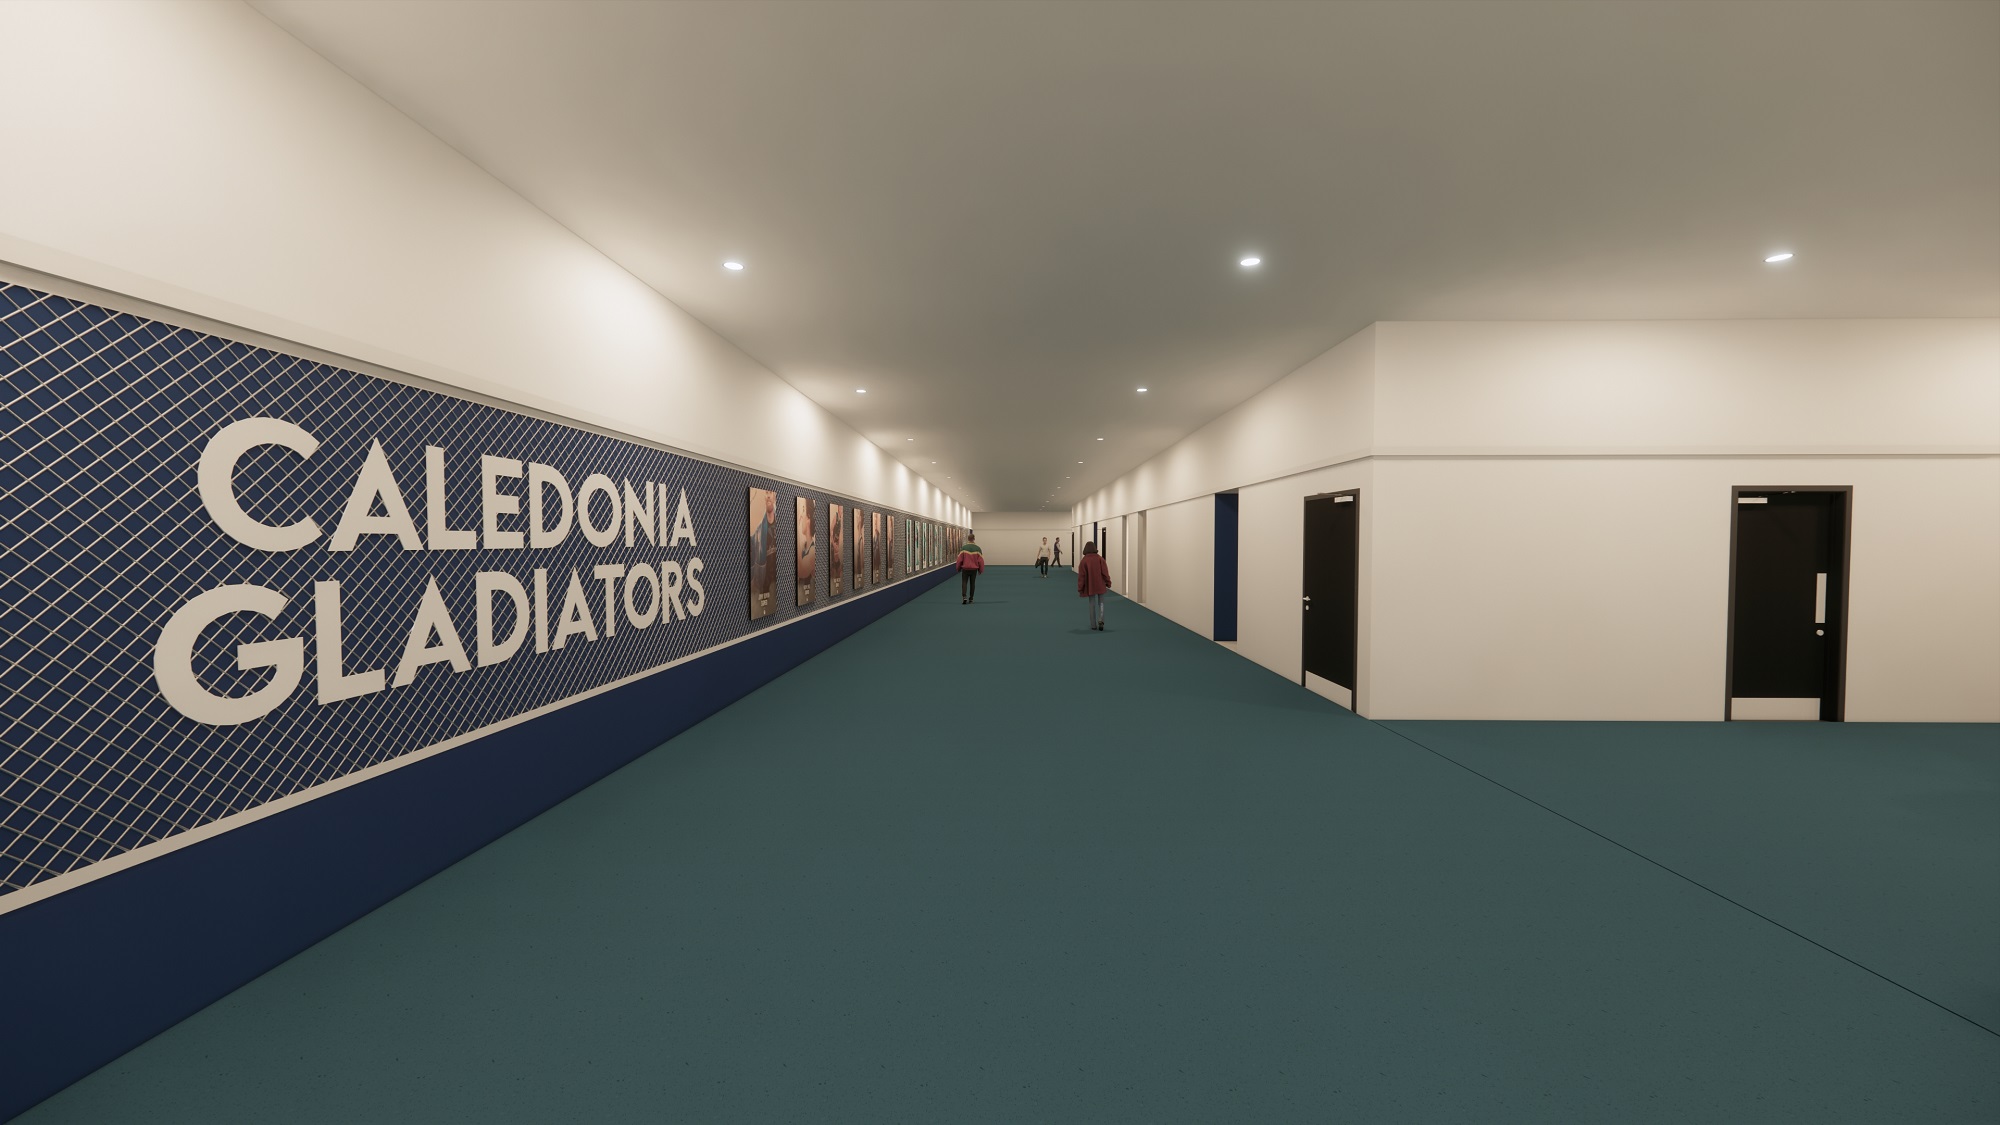 Caledonia Gladiators Concourse